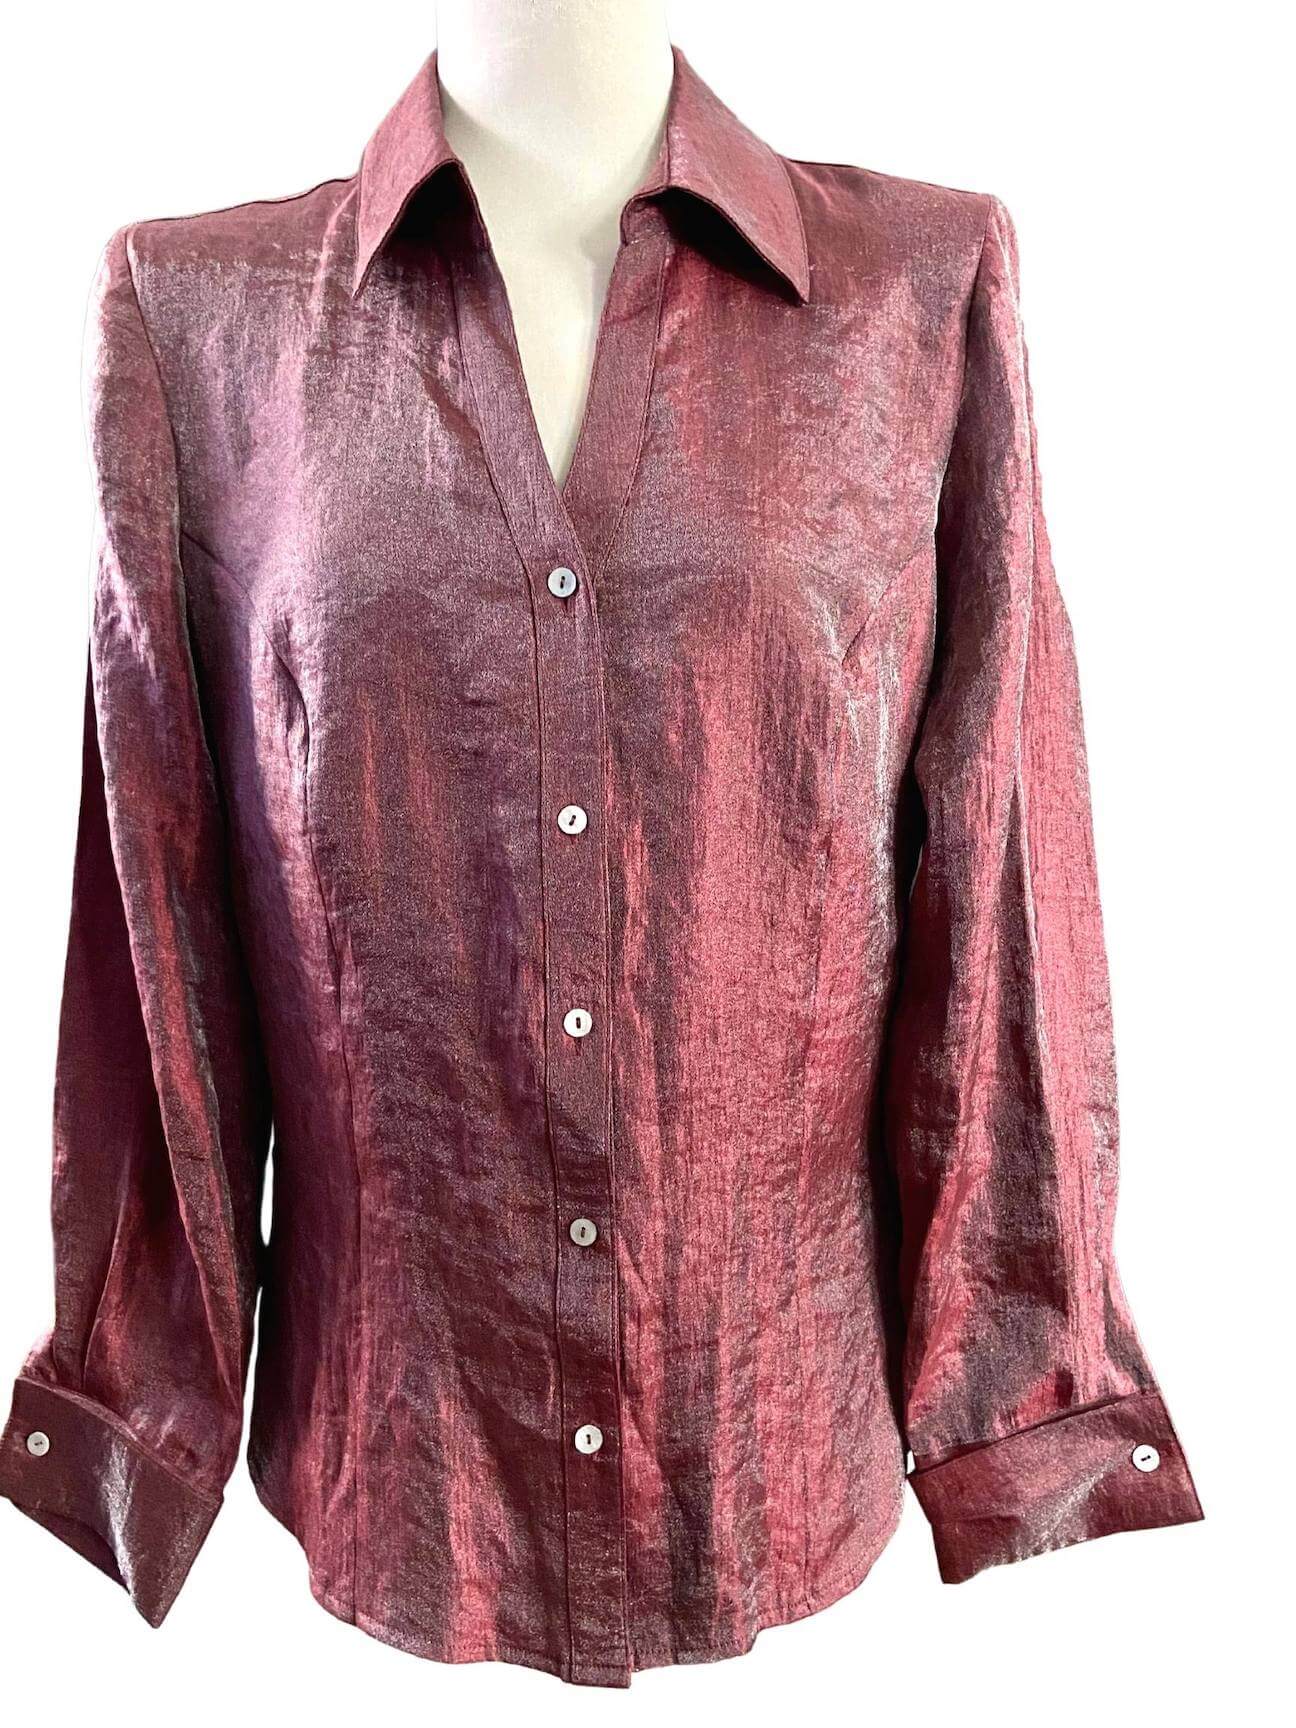 Soft Autumn COLDWATER CREEK rust taffeta shimmer blouse